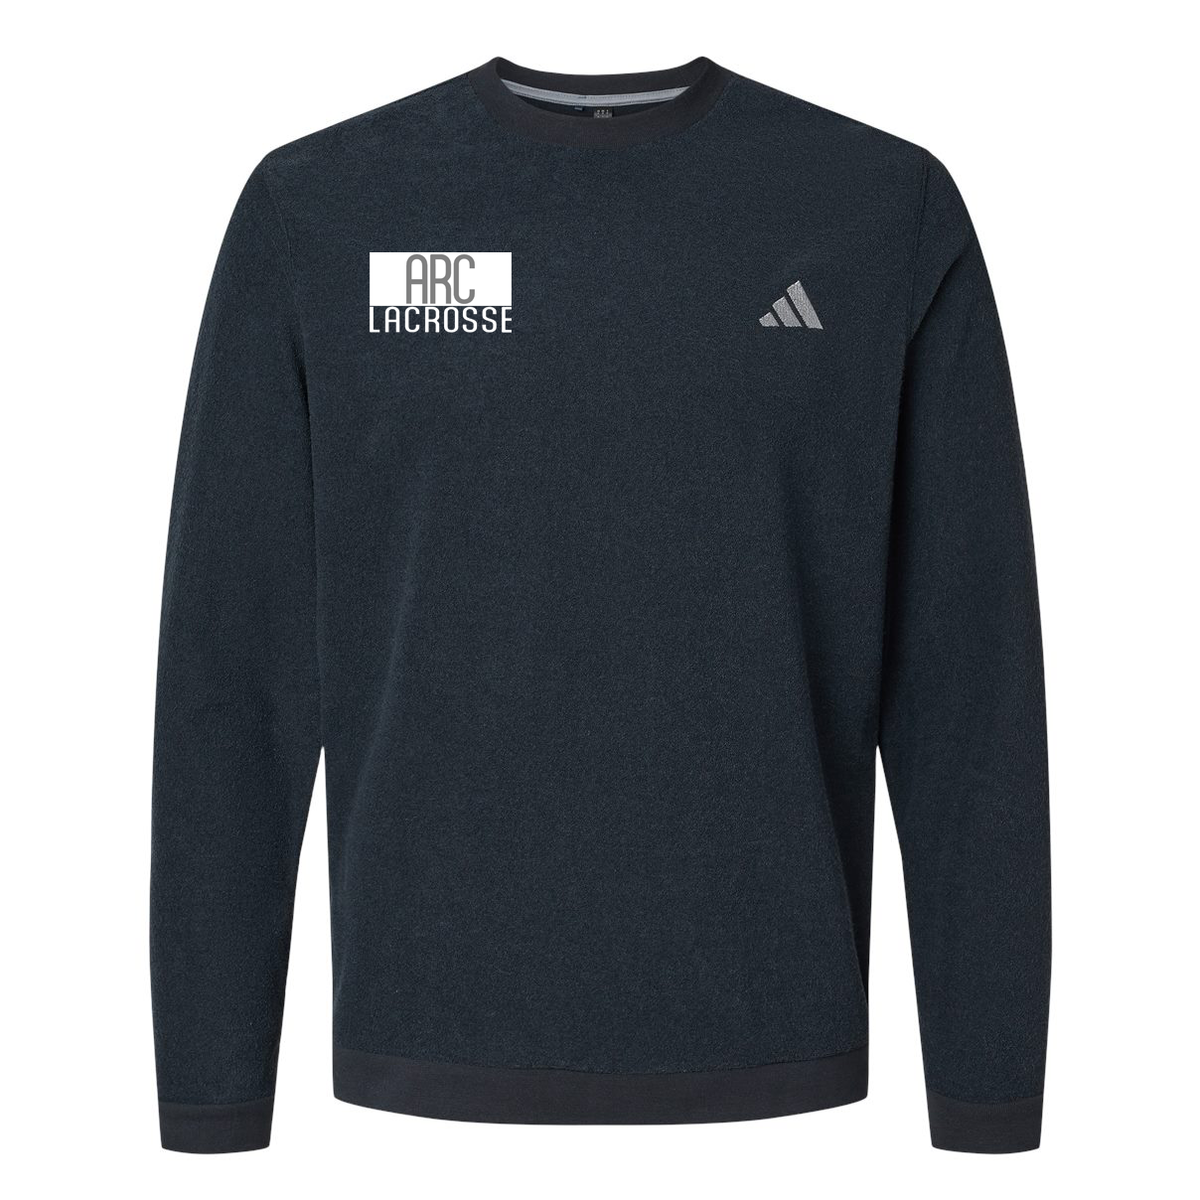 Arc Lacrosse Club Adidas Crewneck Sweatshirt